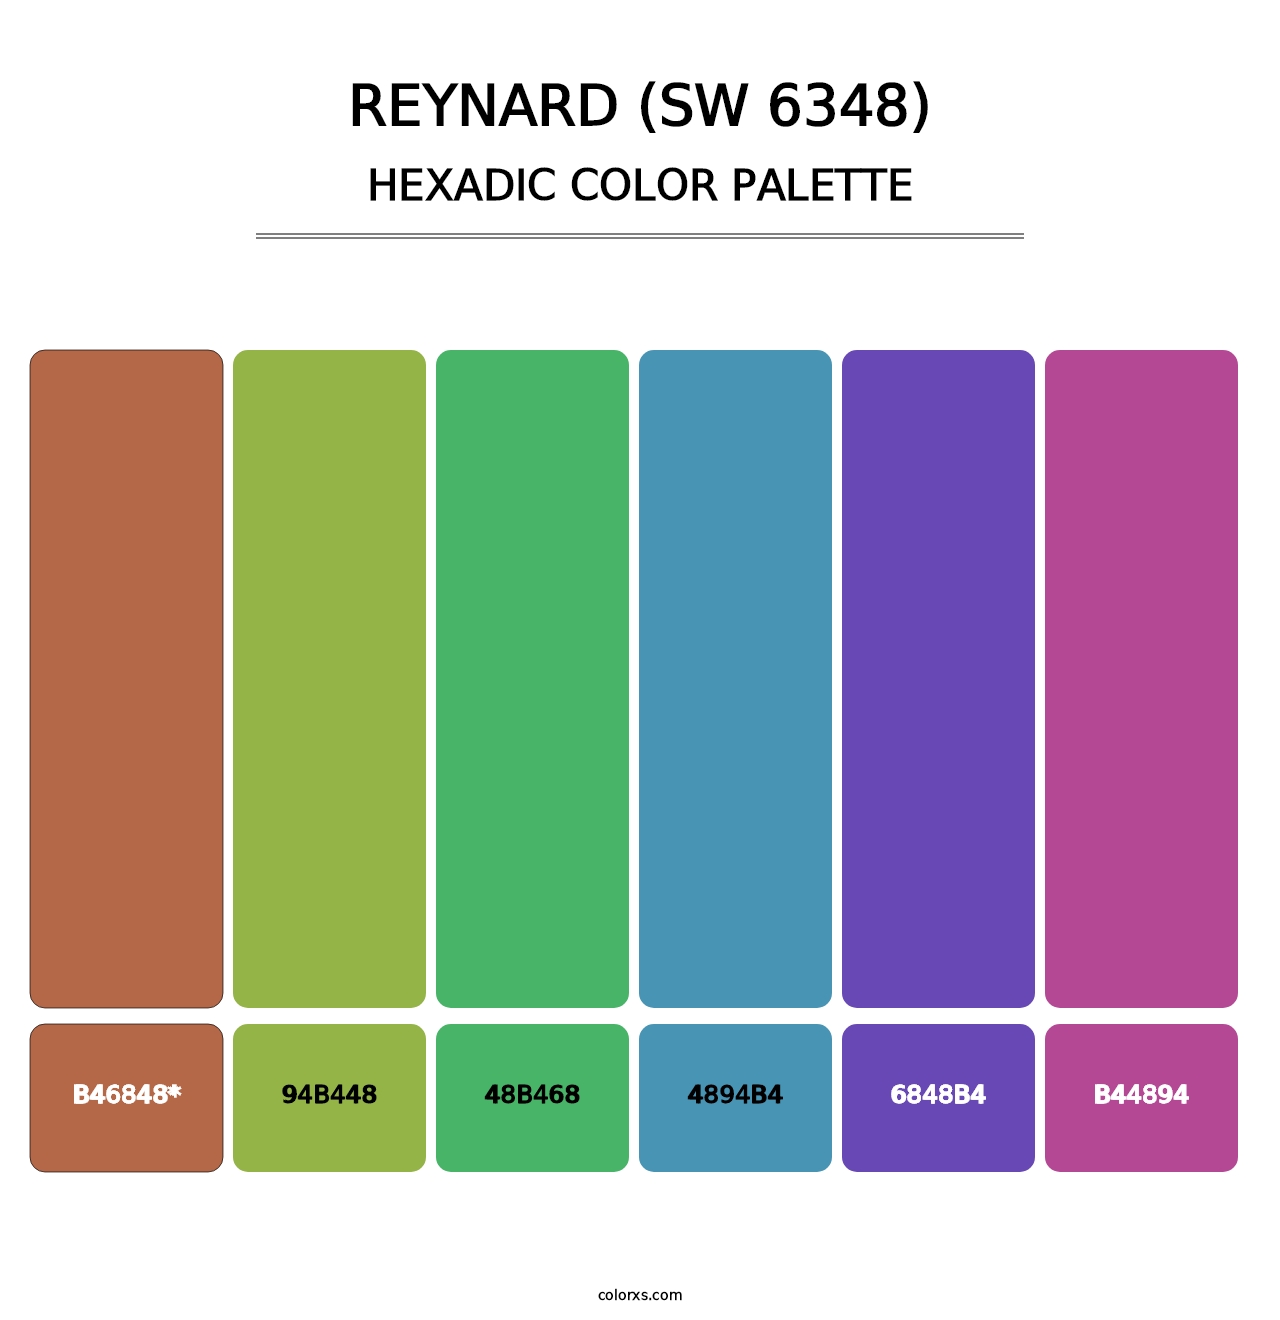 Reynard (SW 6348) - Hexadic Color Palette